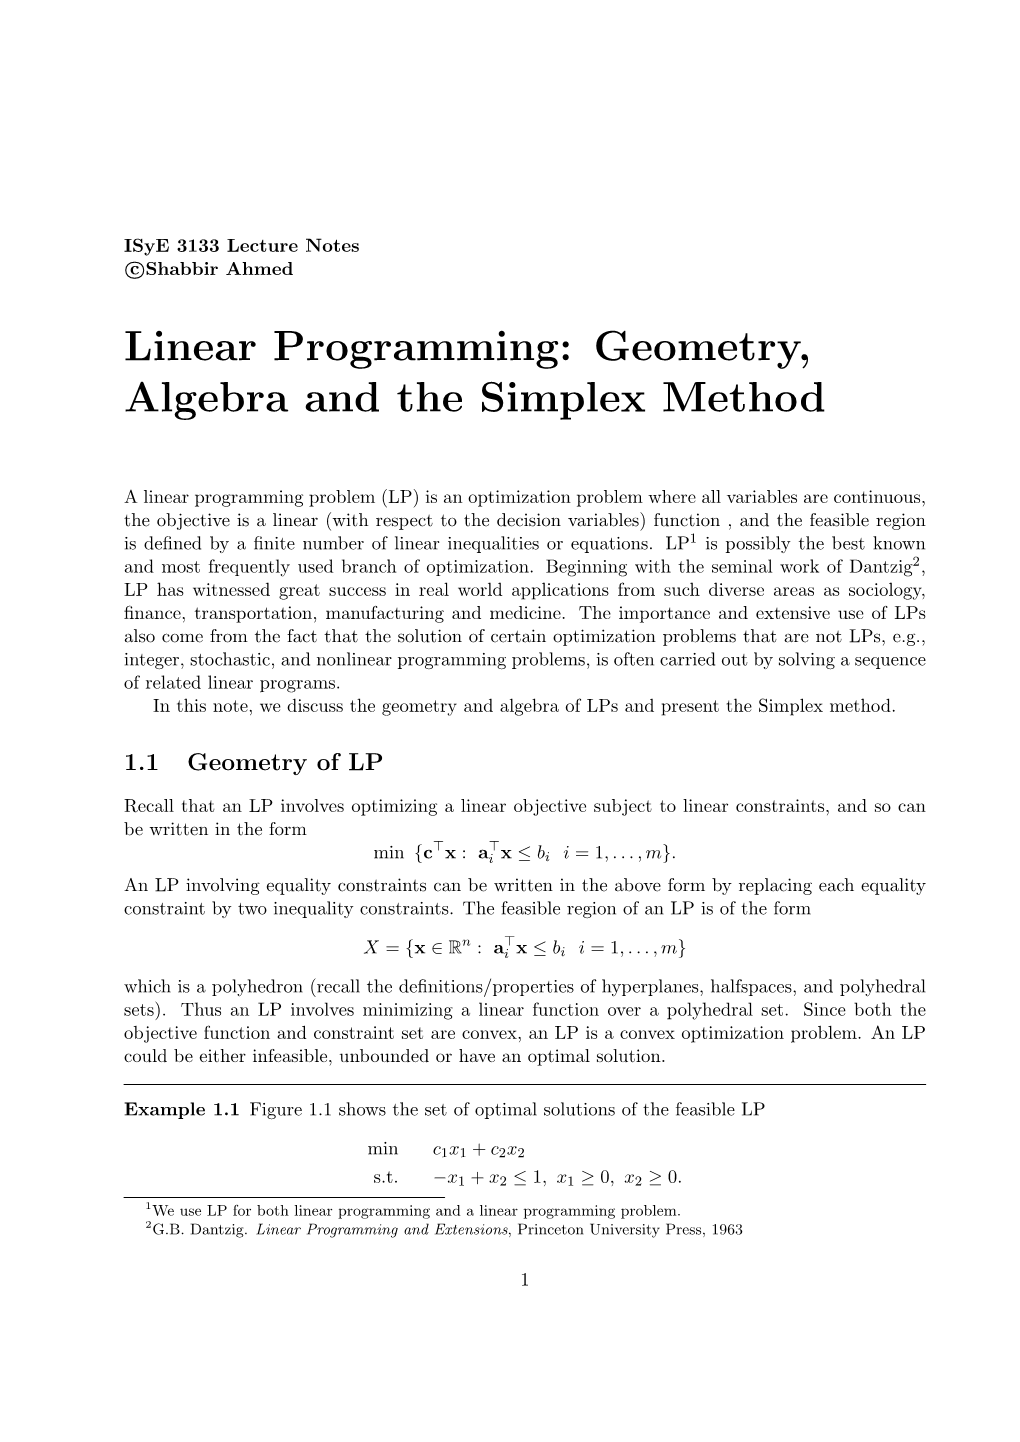 Linear Programming: Geometry, Algebra and the Simplex Method